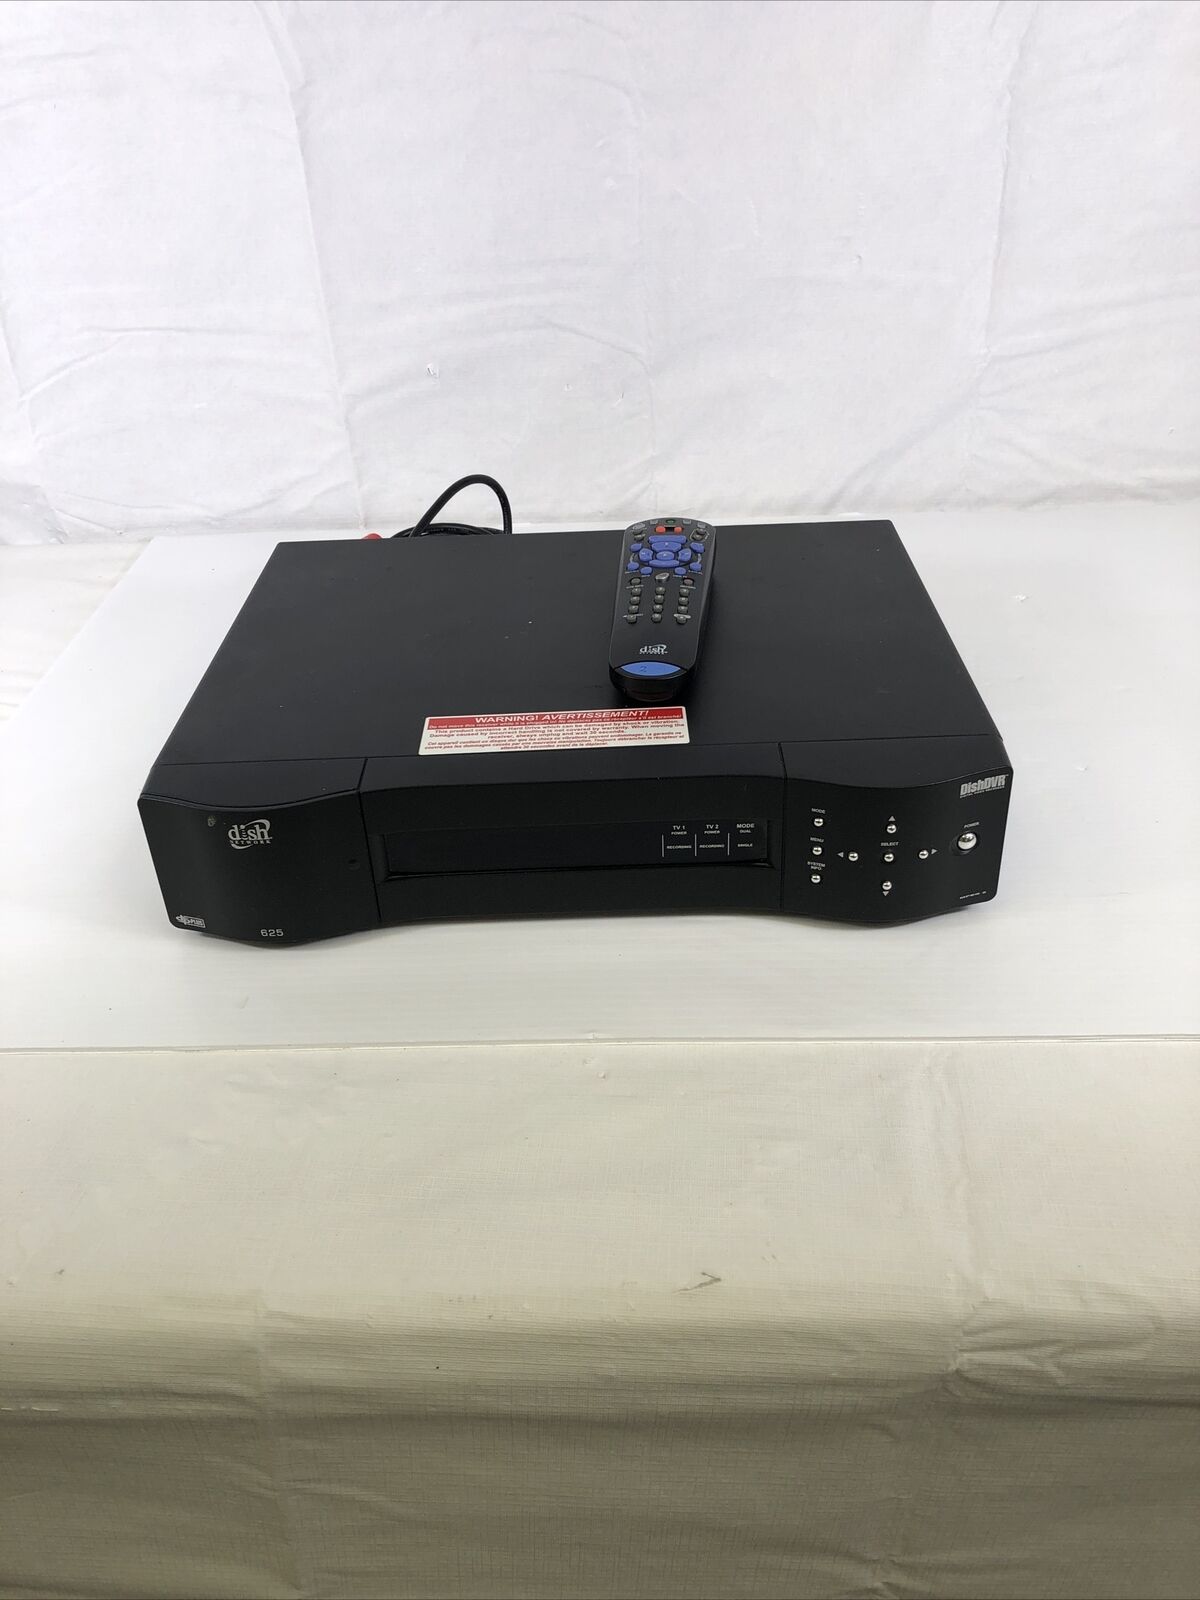 DISH NETWORK MODEL 625 SATELLITE TV HD DVR TUNER RECORDER RECEIVER w Remote